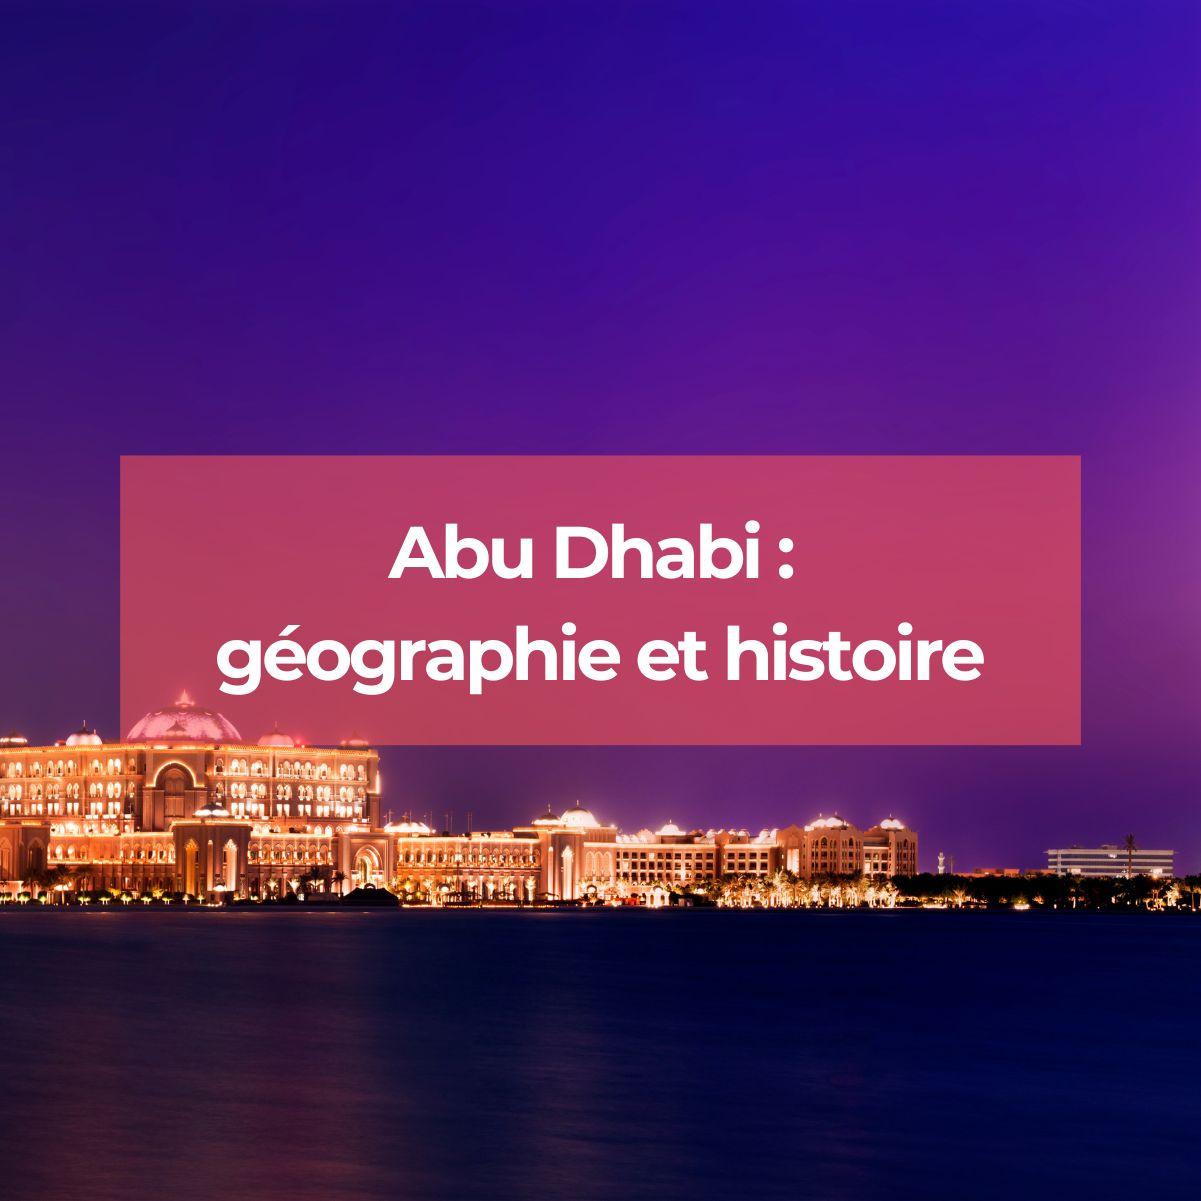 Où se trouve Abu Dhabi ?